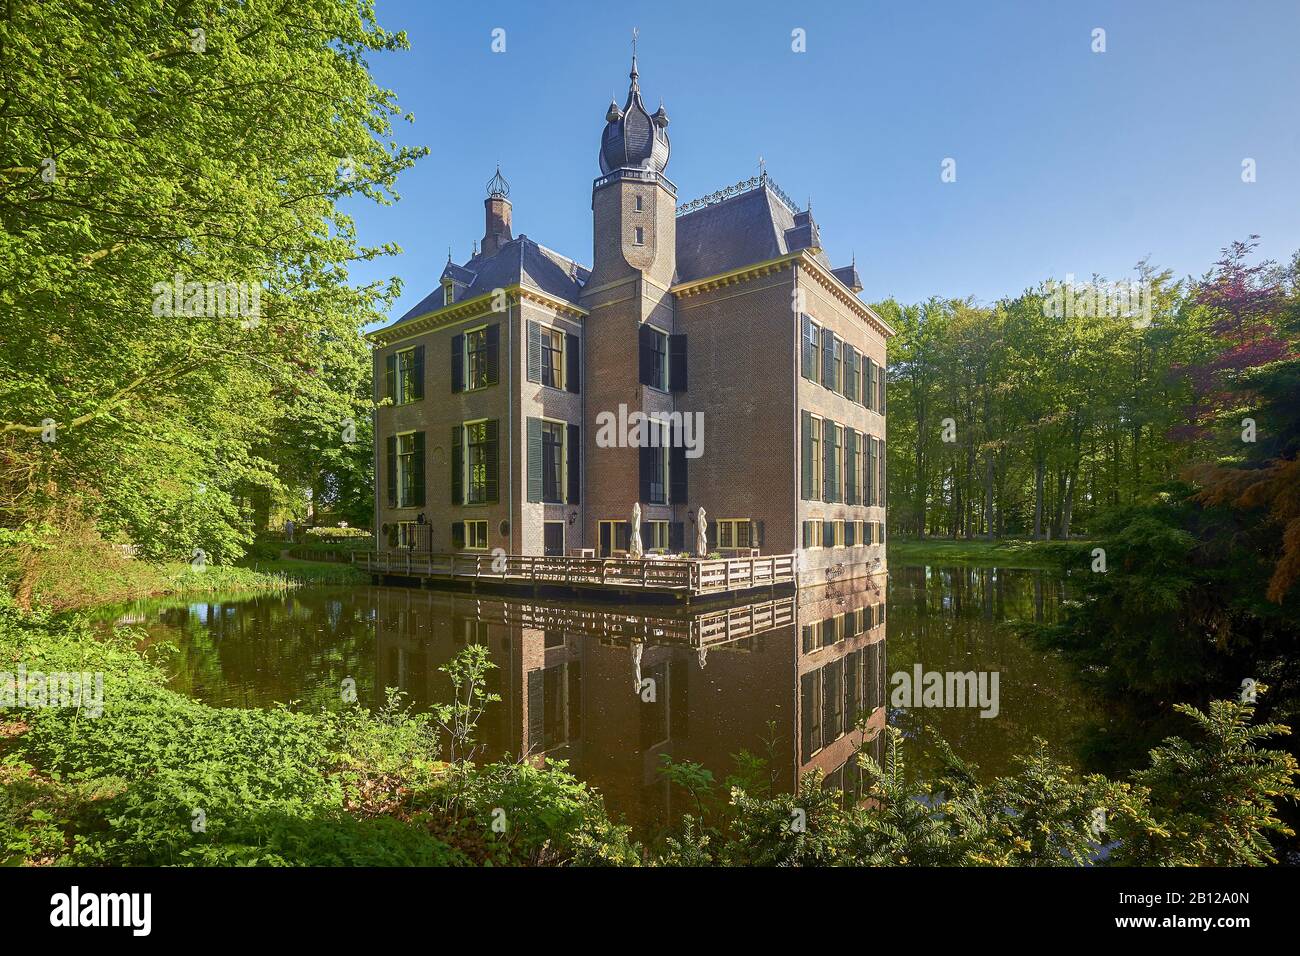 Landgoed Kasteel Oud-Poelgeest in Leiden, South Holland, Netherlands Stock Photo